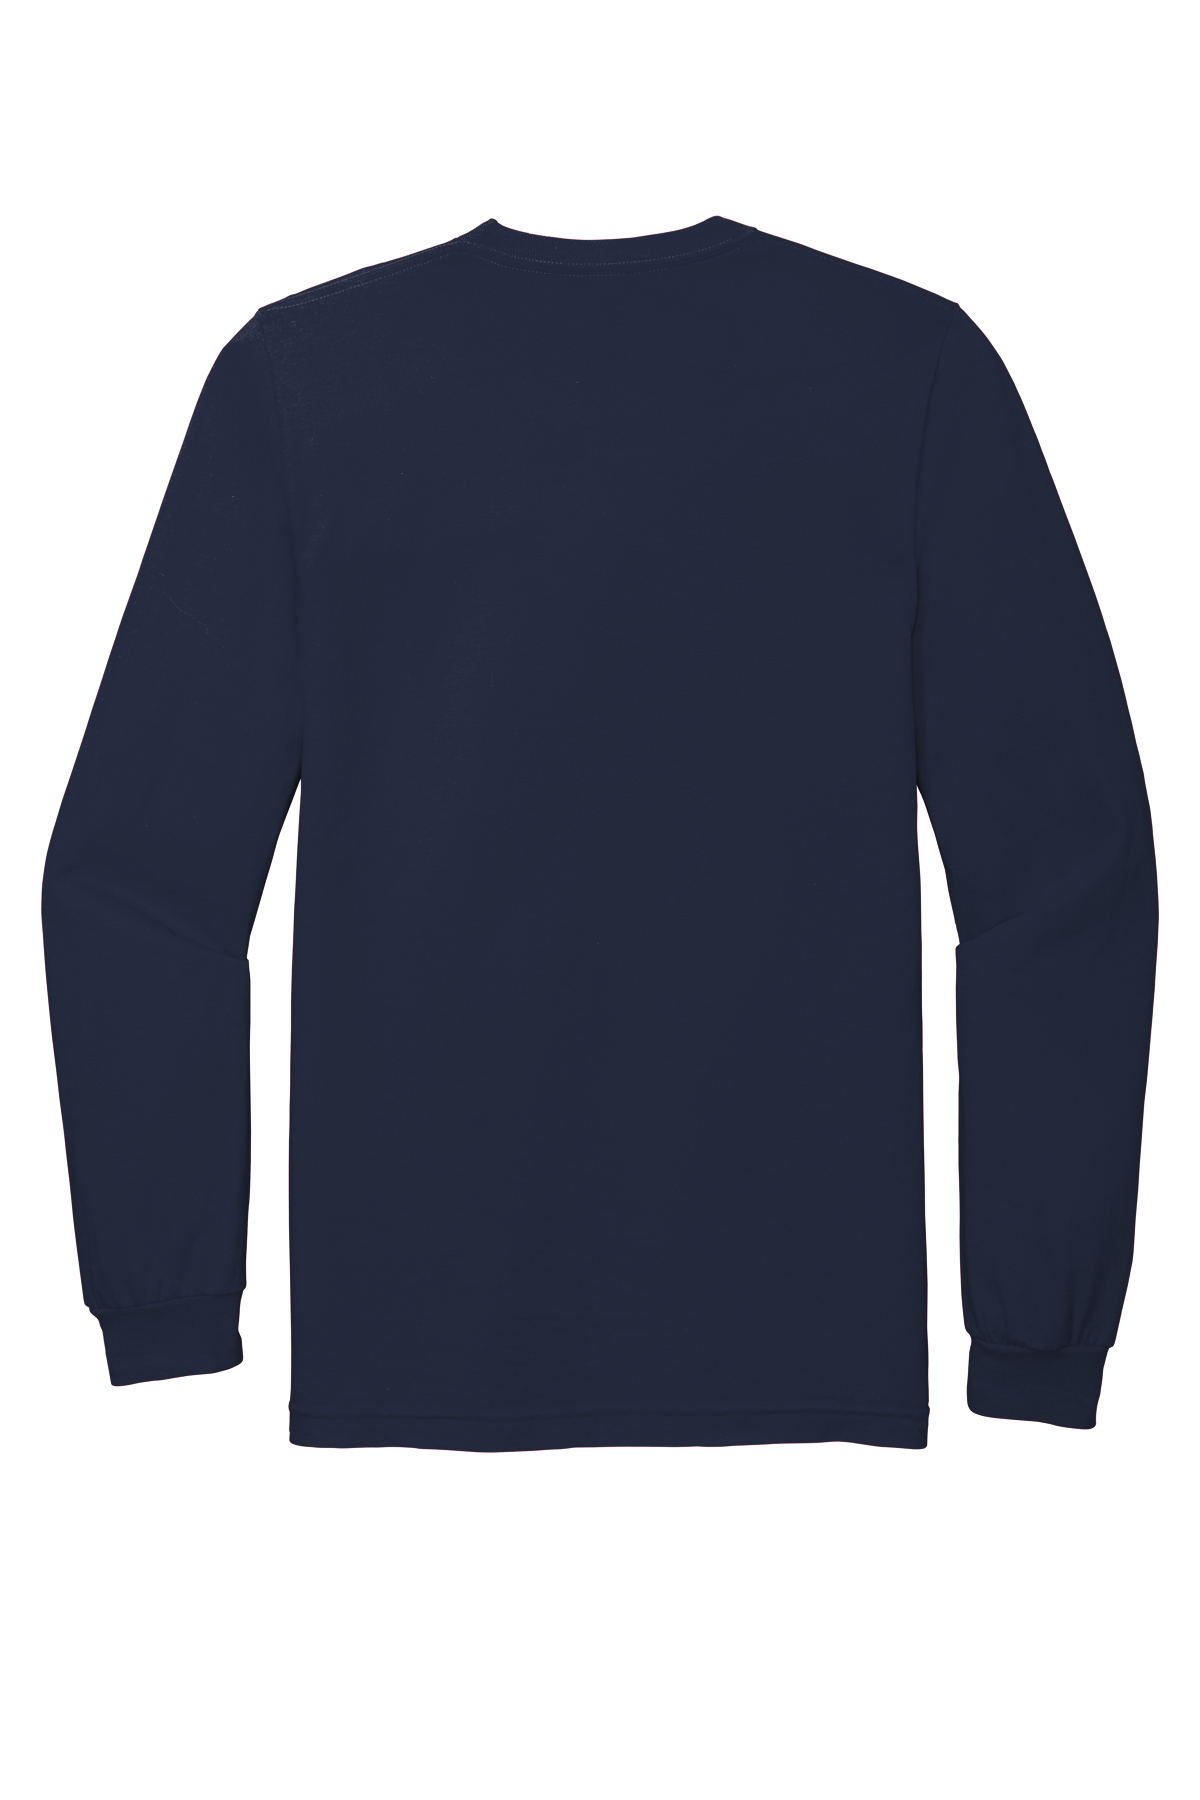 American Apparel Fine Jersey Unisex Long Sleeve T-Shirt | Product | SanMar